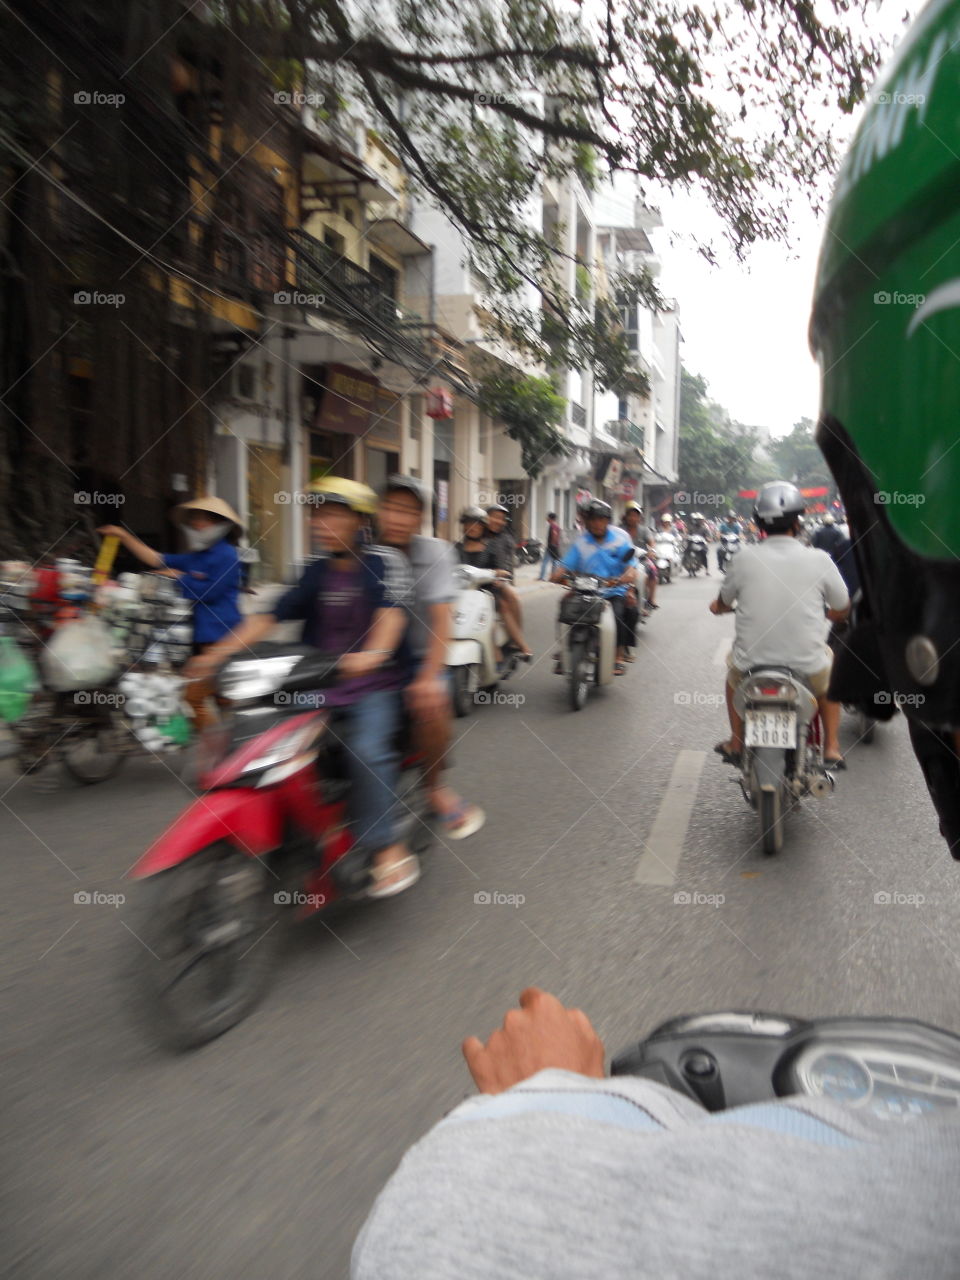 Zipping through the crazy streets of Hanoi Vietnam the way the locals do